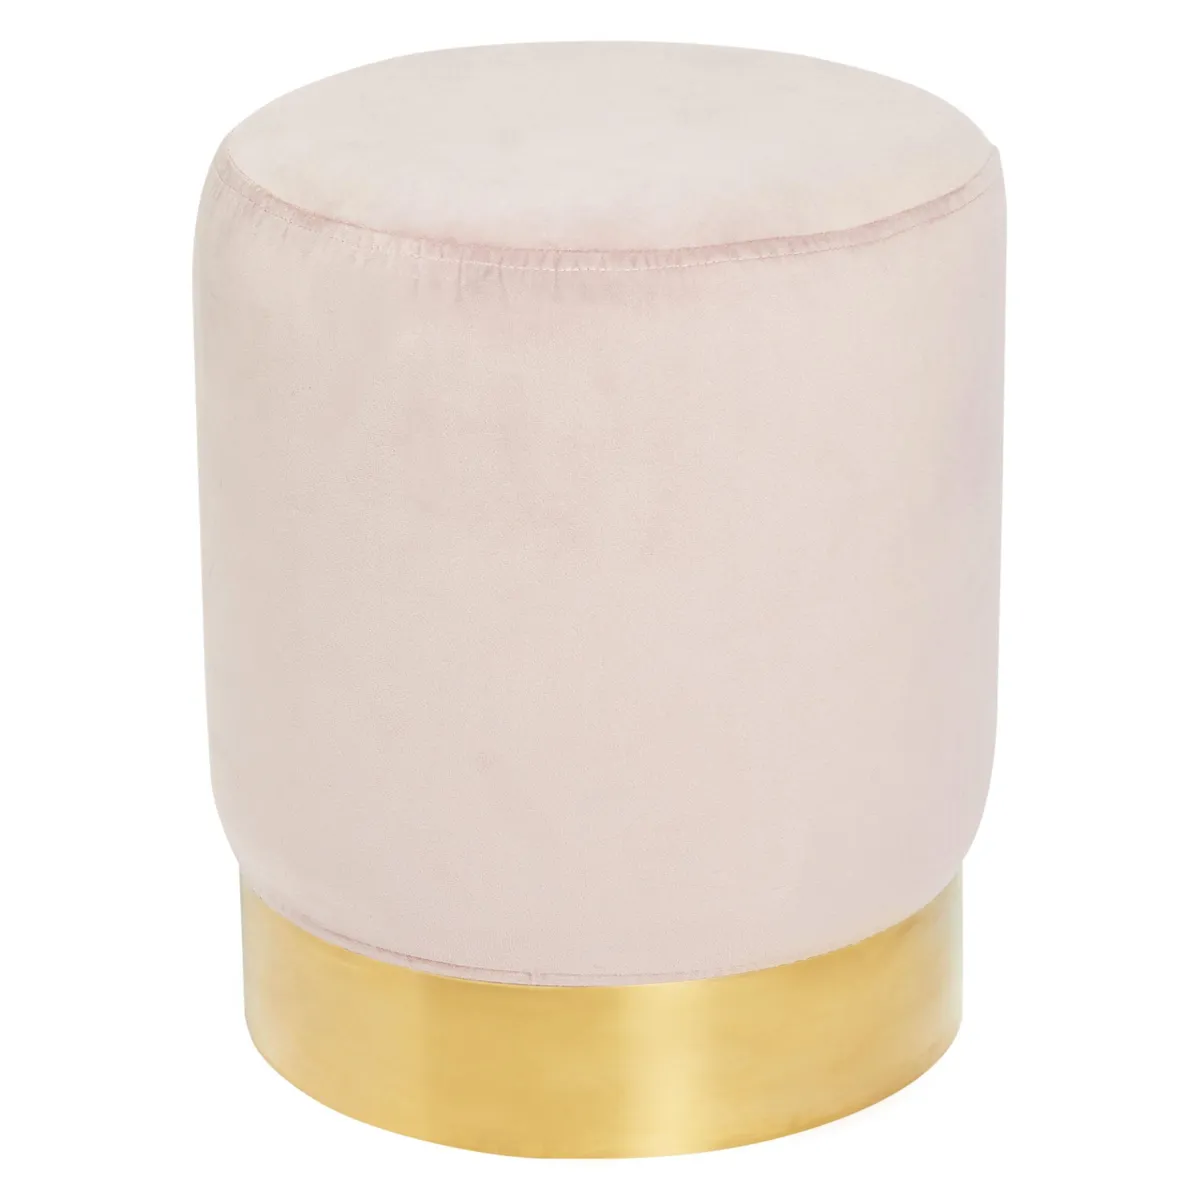 Pink velvet stool with gold trim, £25